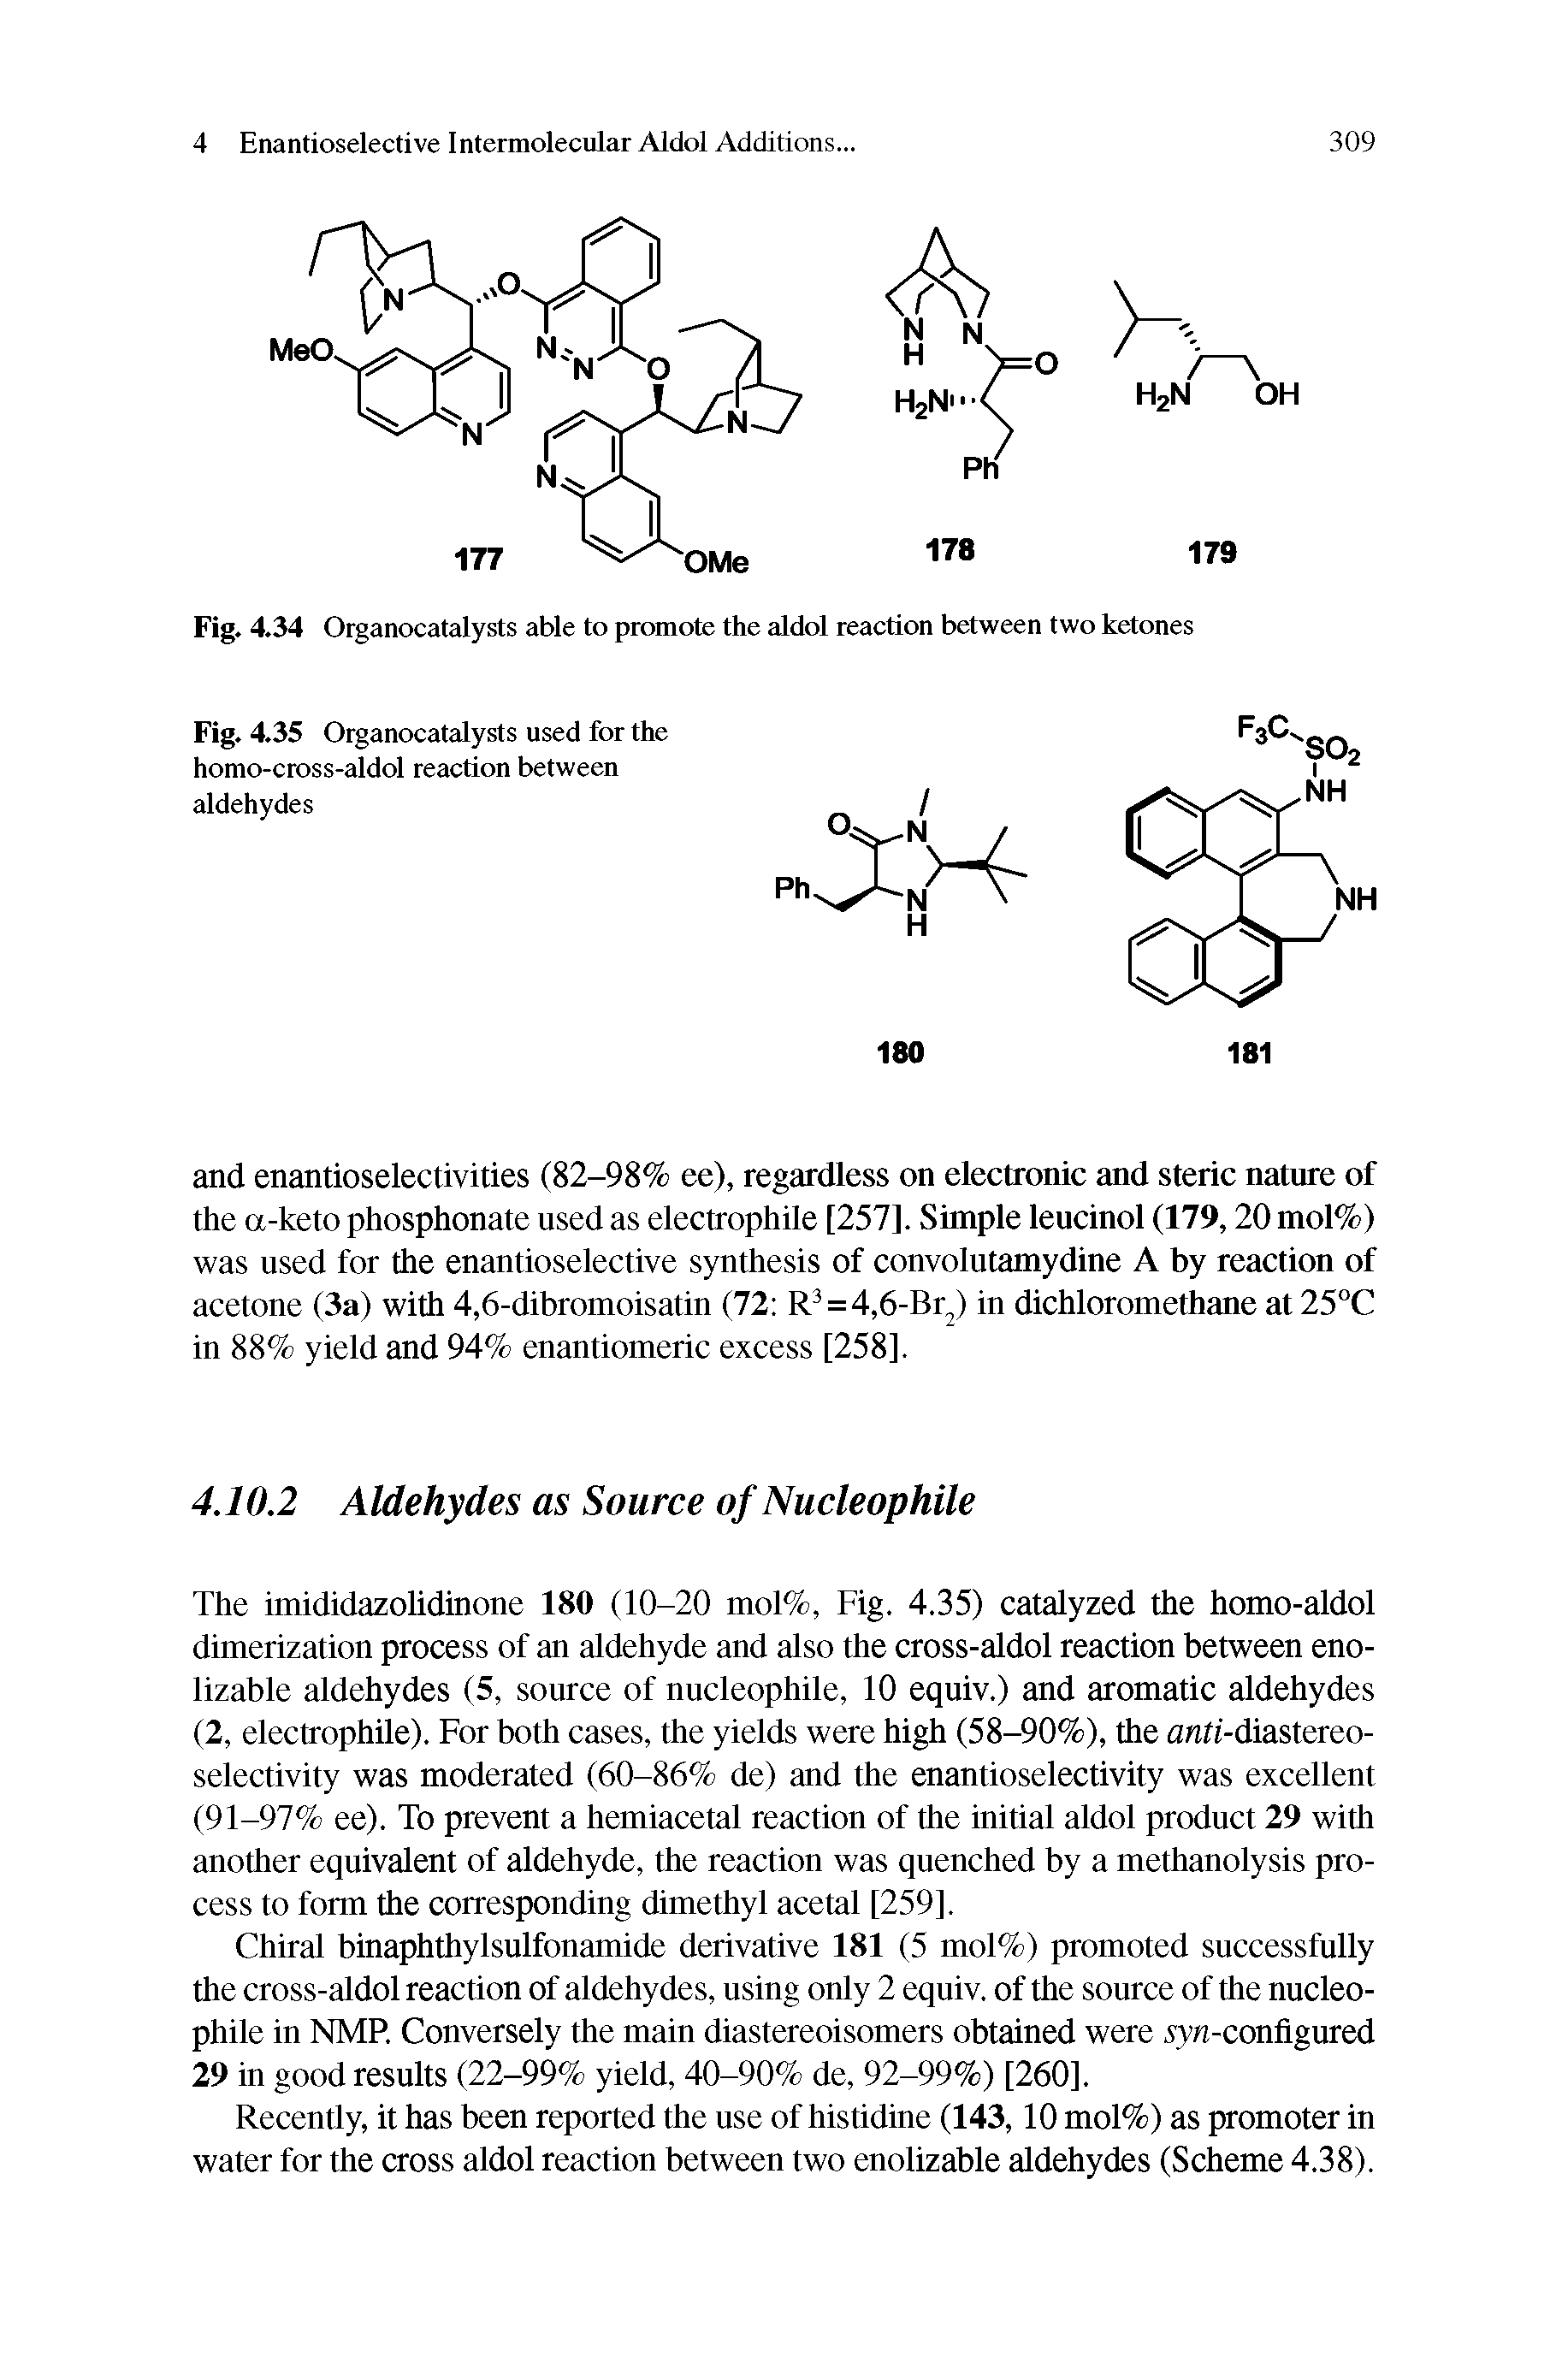 Fig. 4. 35 Organocatalysts used for the homo-cross-aldol reaction between aldehydes...